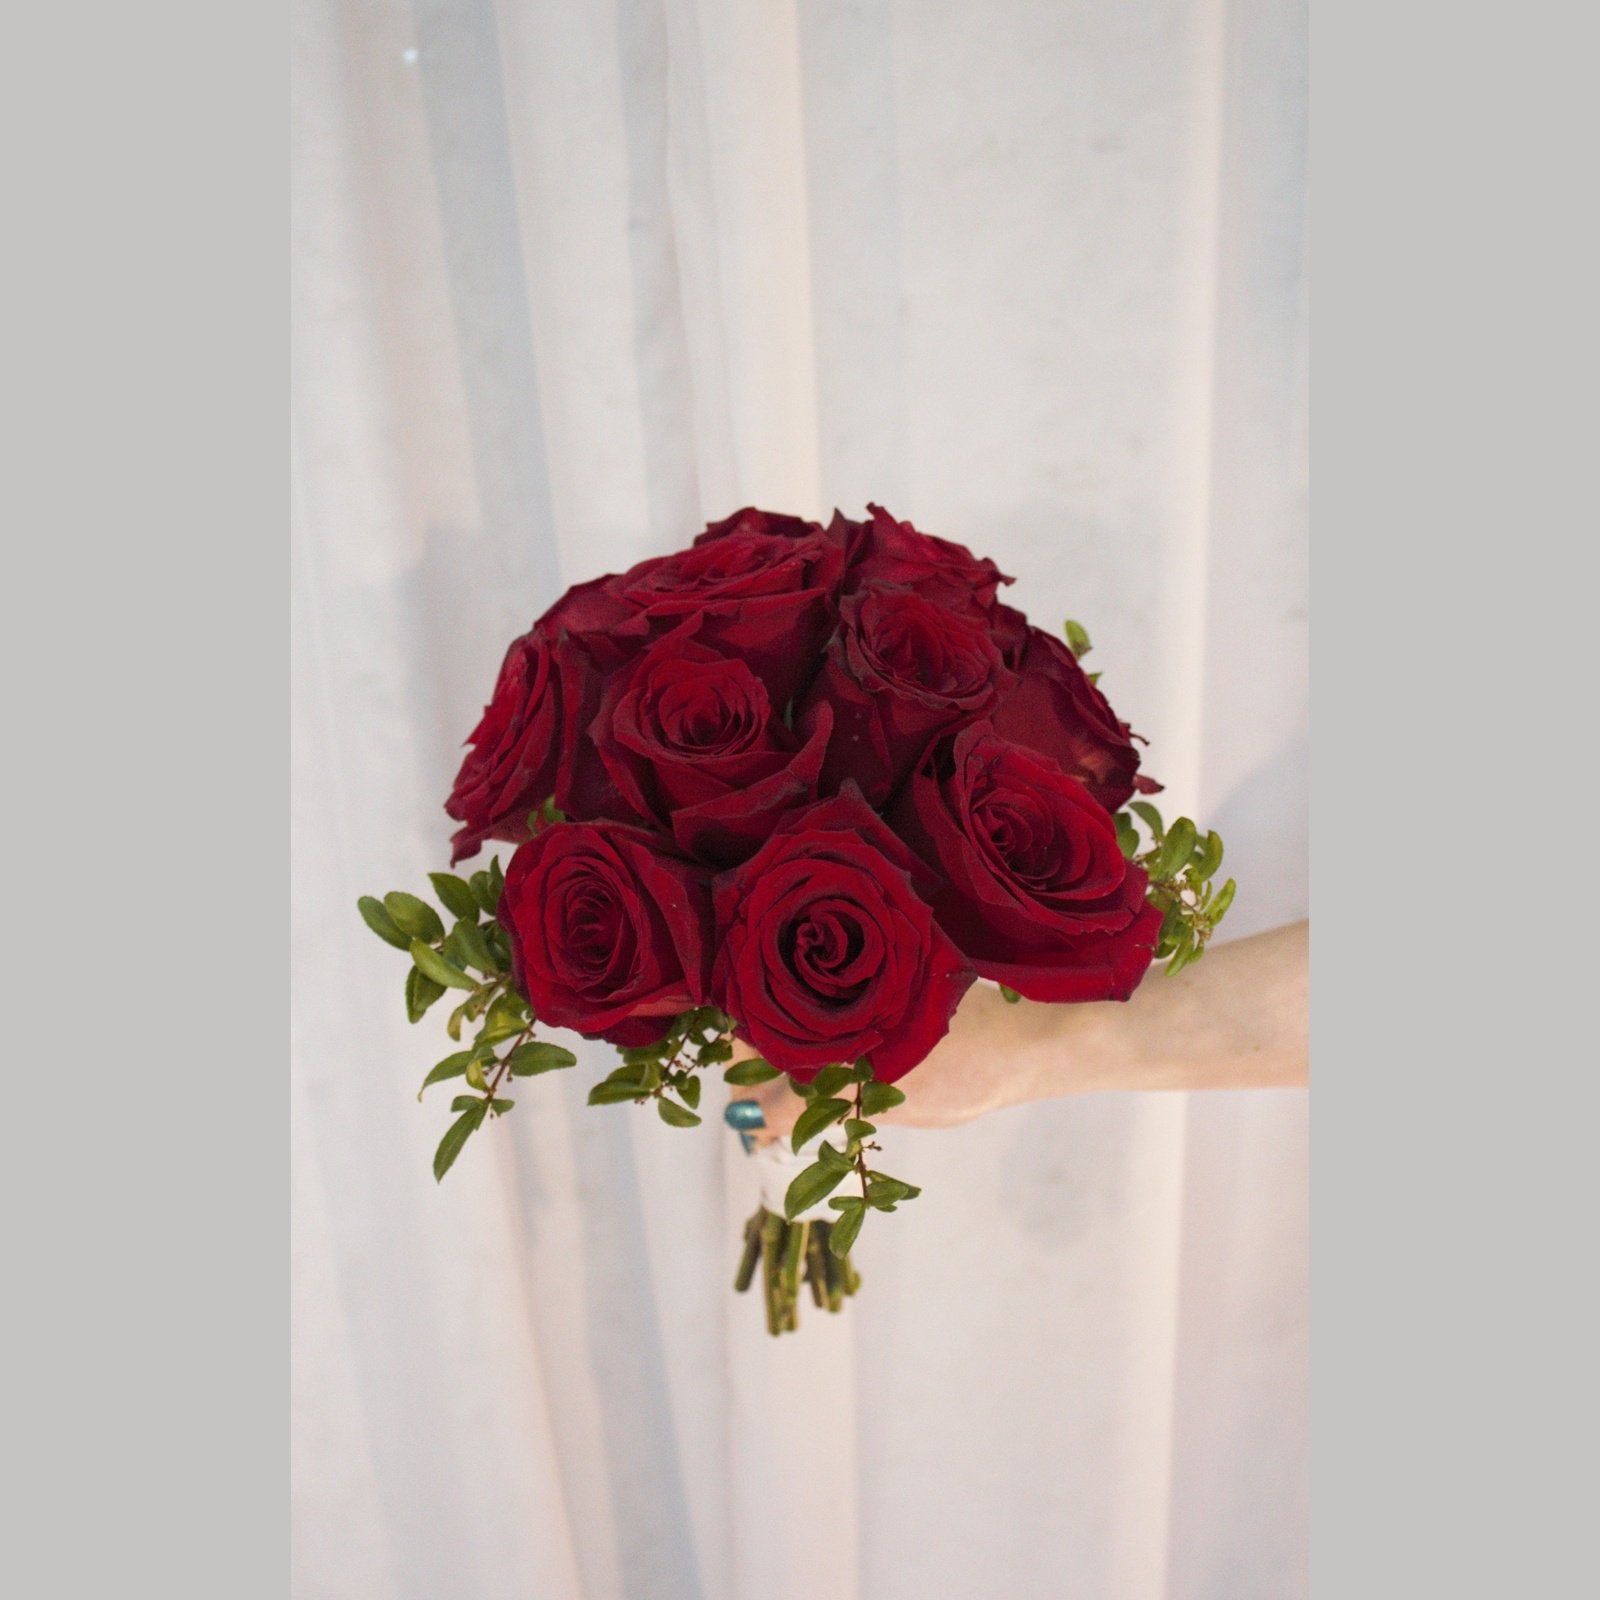 tight, classic rose bridal bouquet